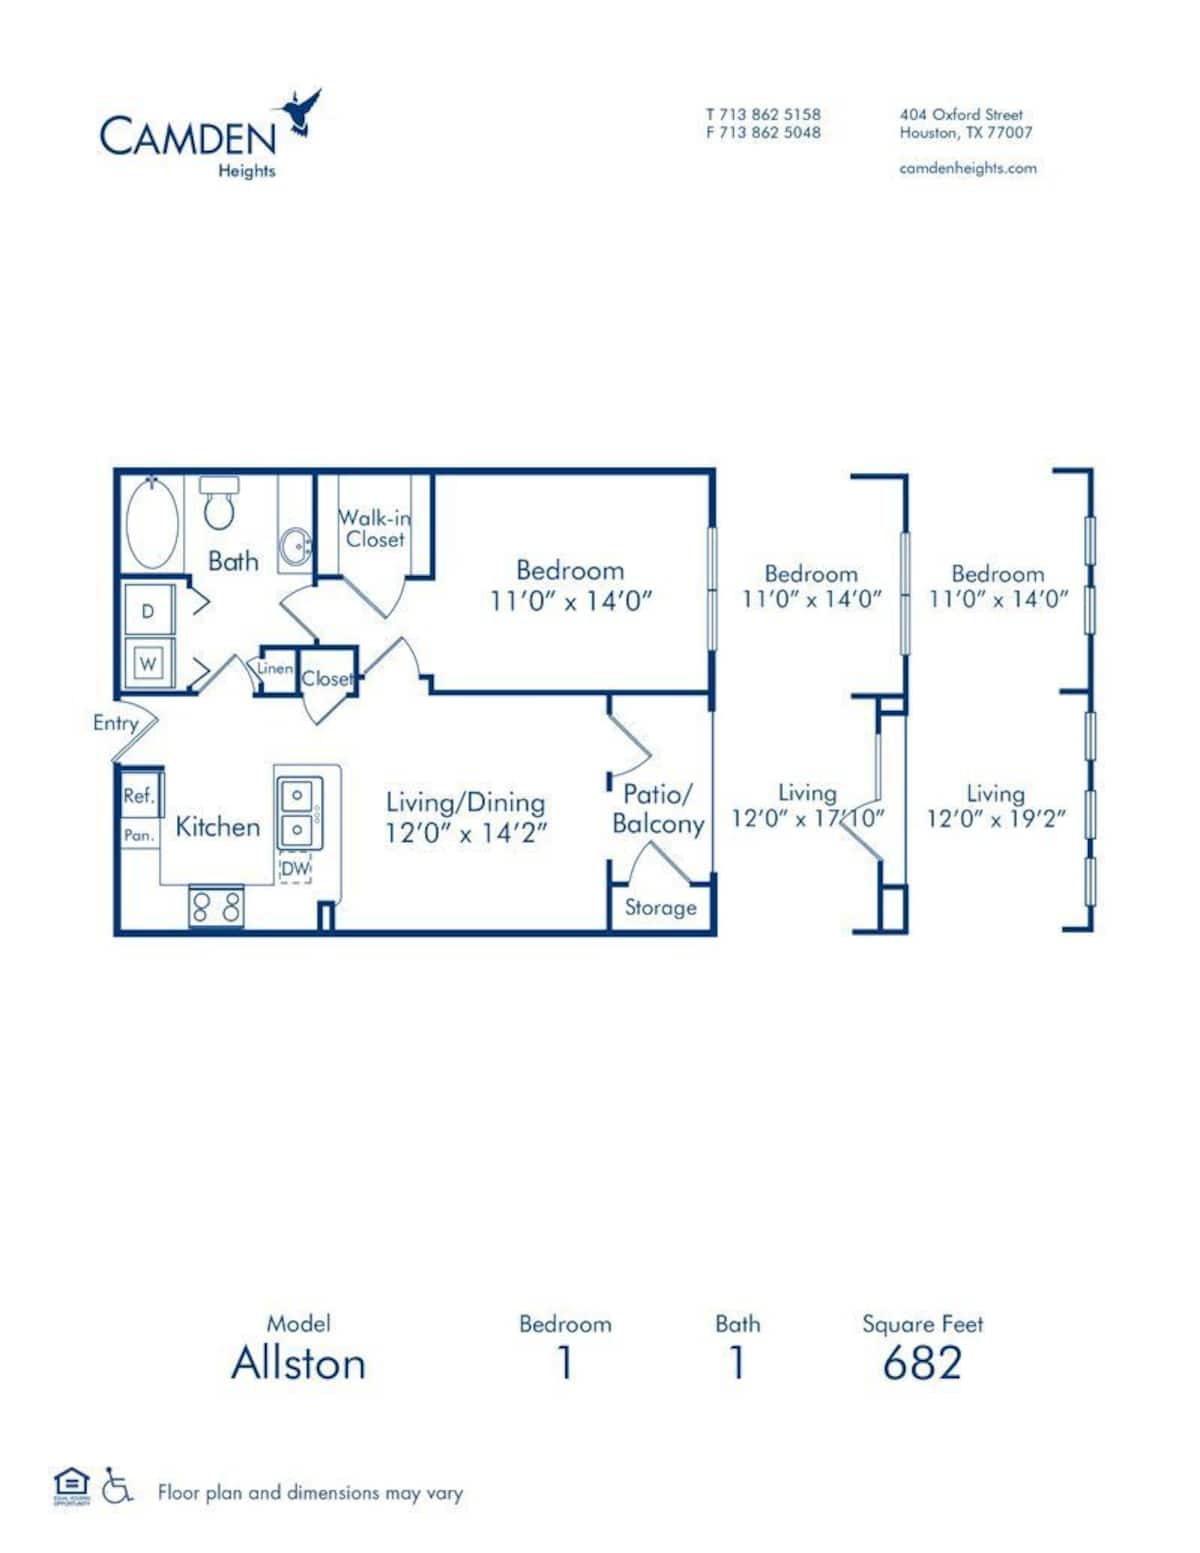 Floorplan diagram for The Allston, showing 1 bedroom